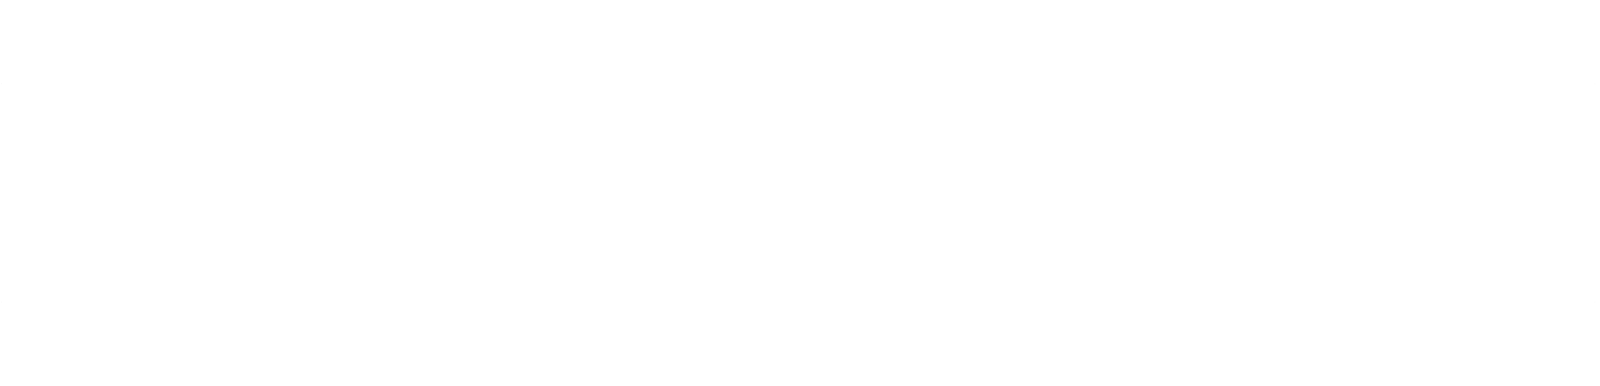 Kuboid - Federation of European Self Storage Associations FEDESSA